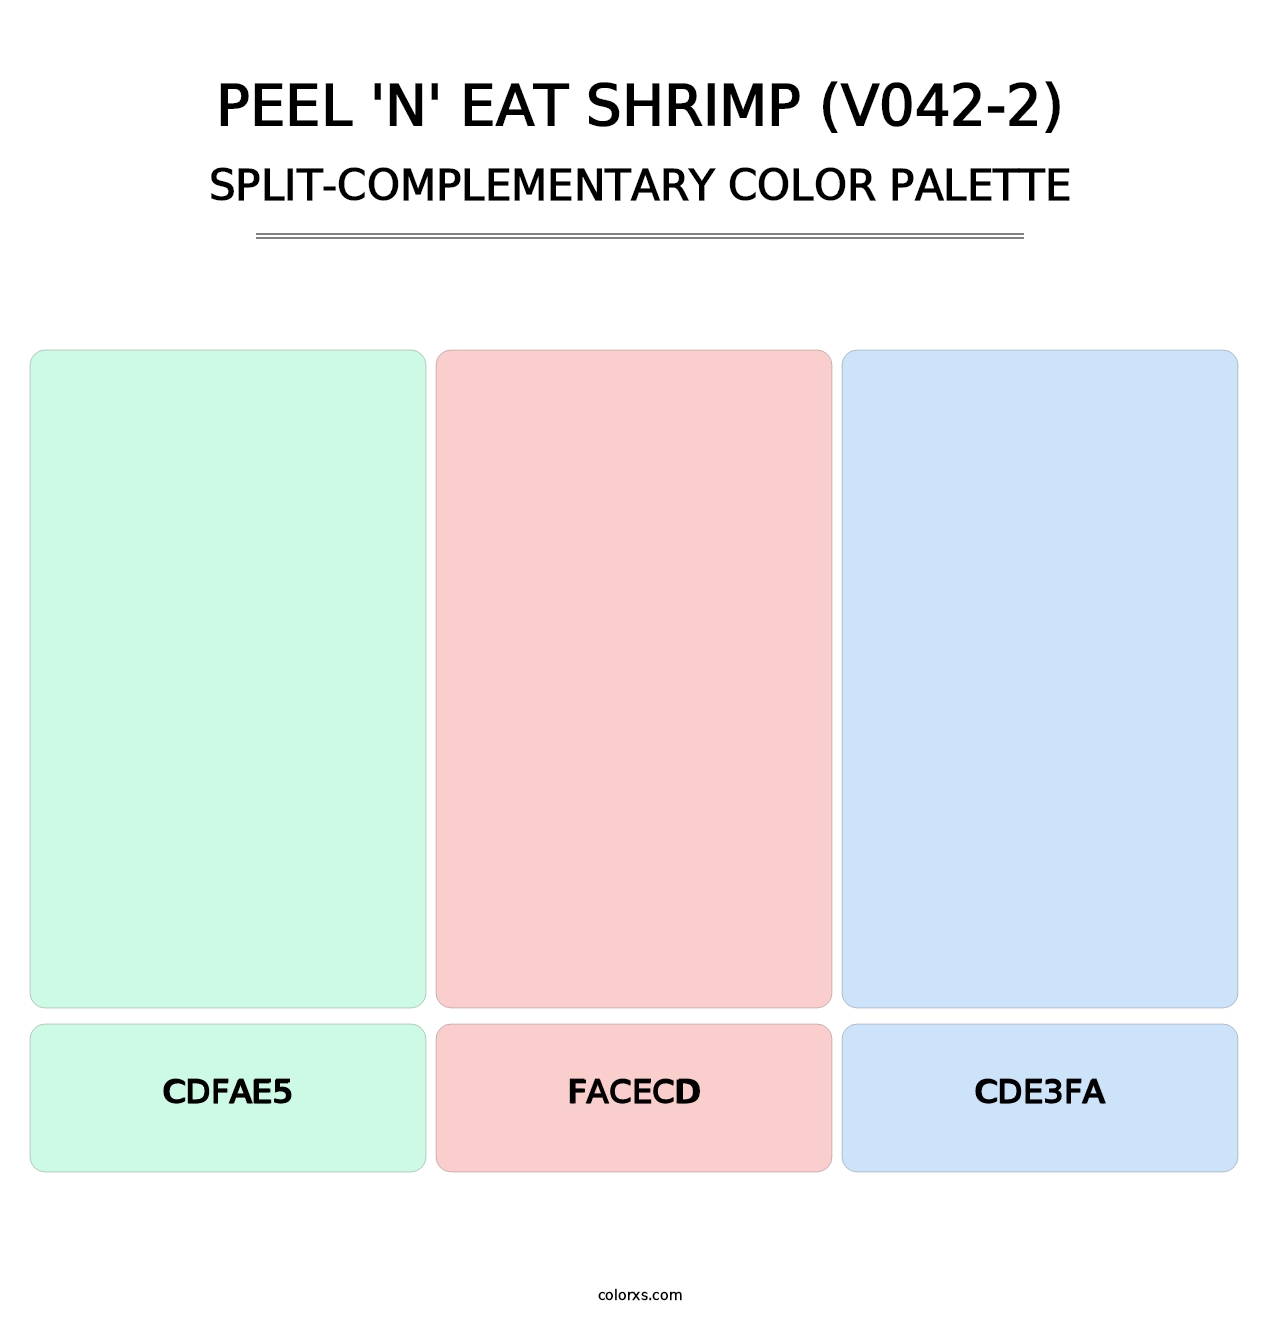 Peel 'n' Eat Shrimp (V042-2) - Split-Complementary Color Palette